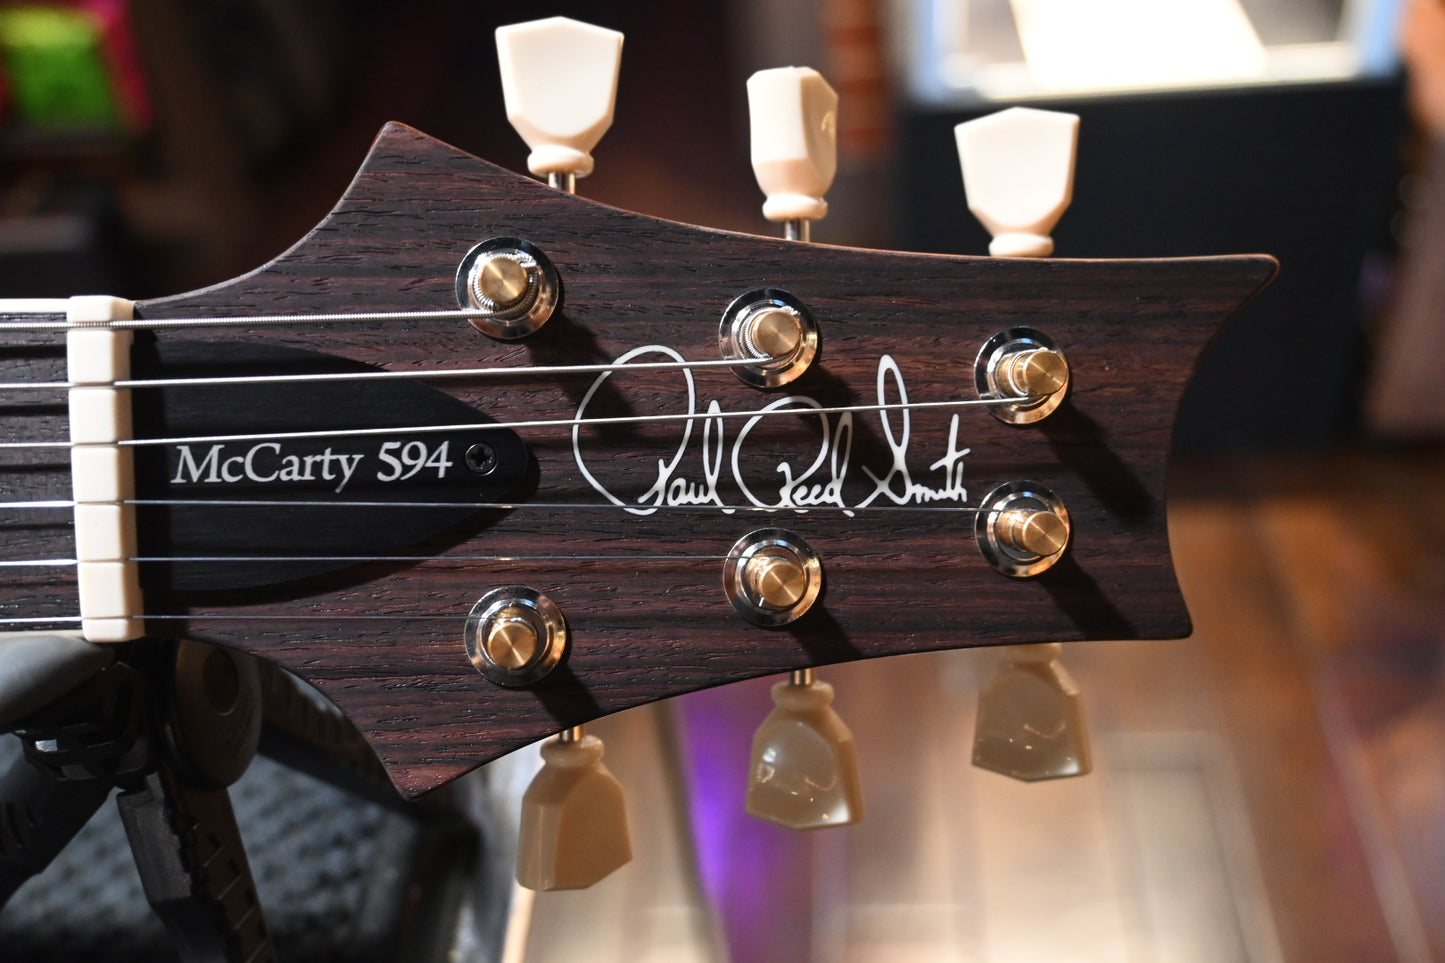 PRS McCarty SC 594 Single-Cut - Charcoal Guitar #2706 - Danville Music